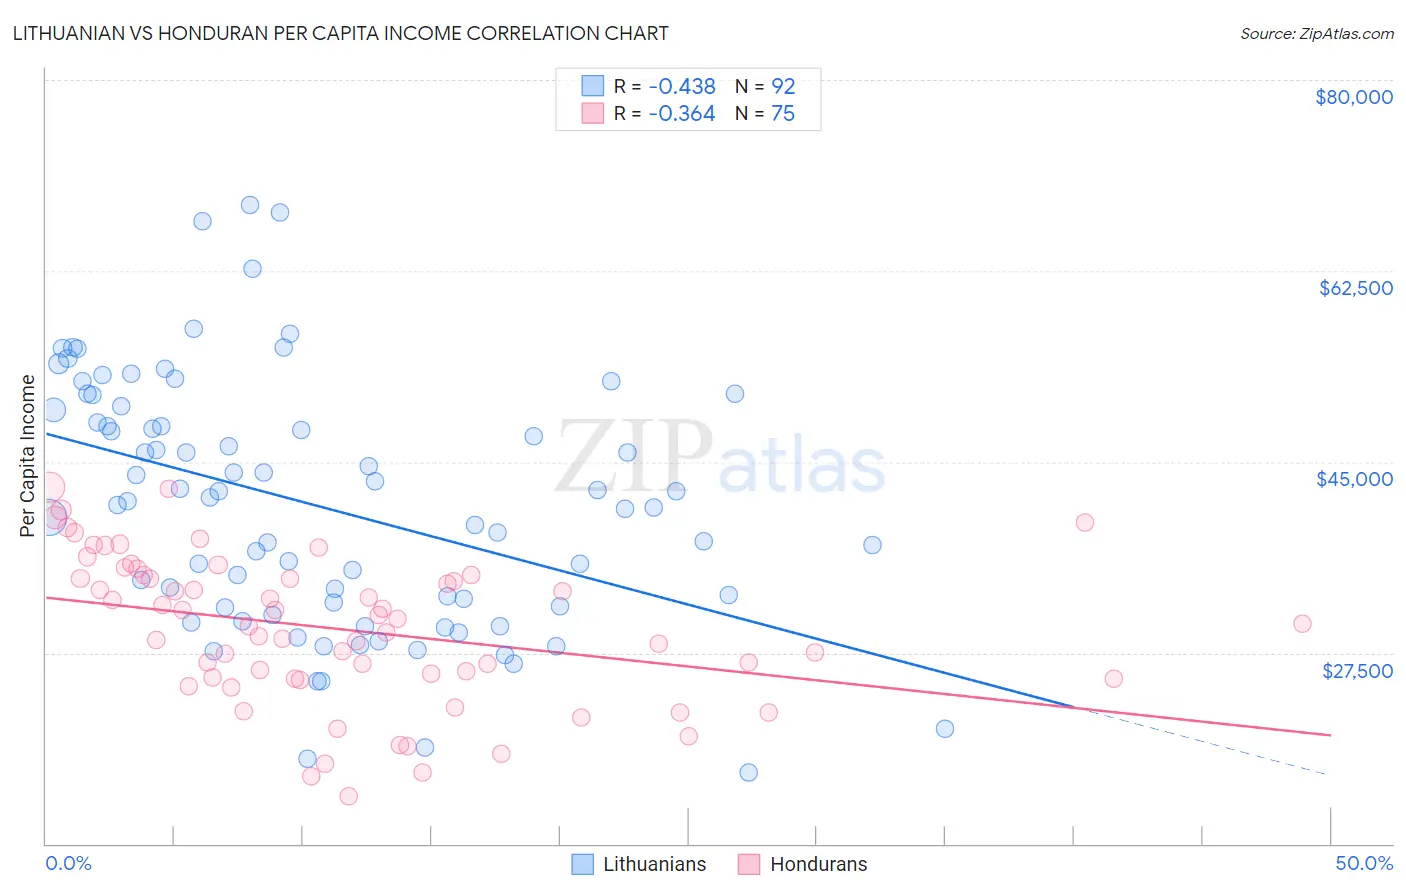 Lithuanian vs Honduran Per Capita Income